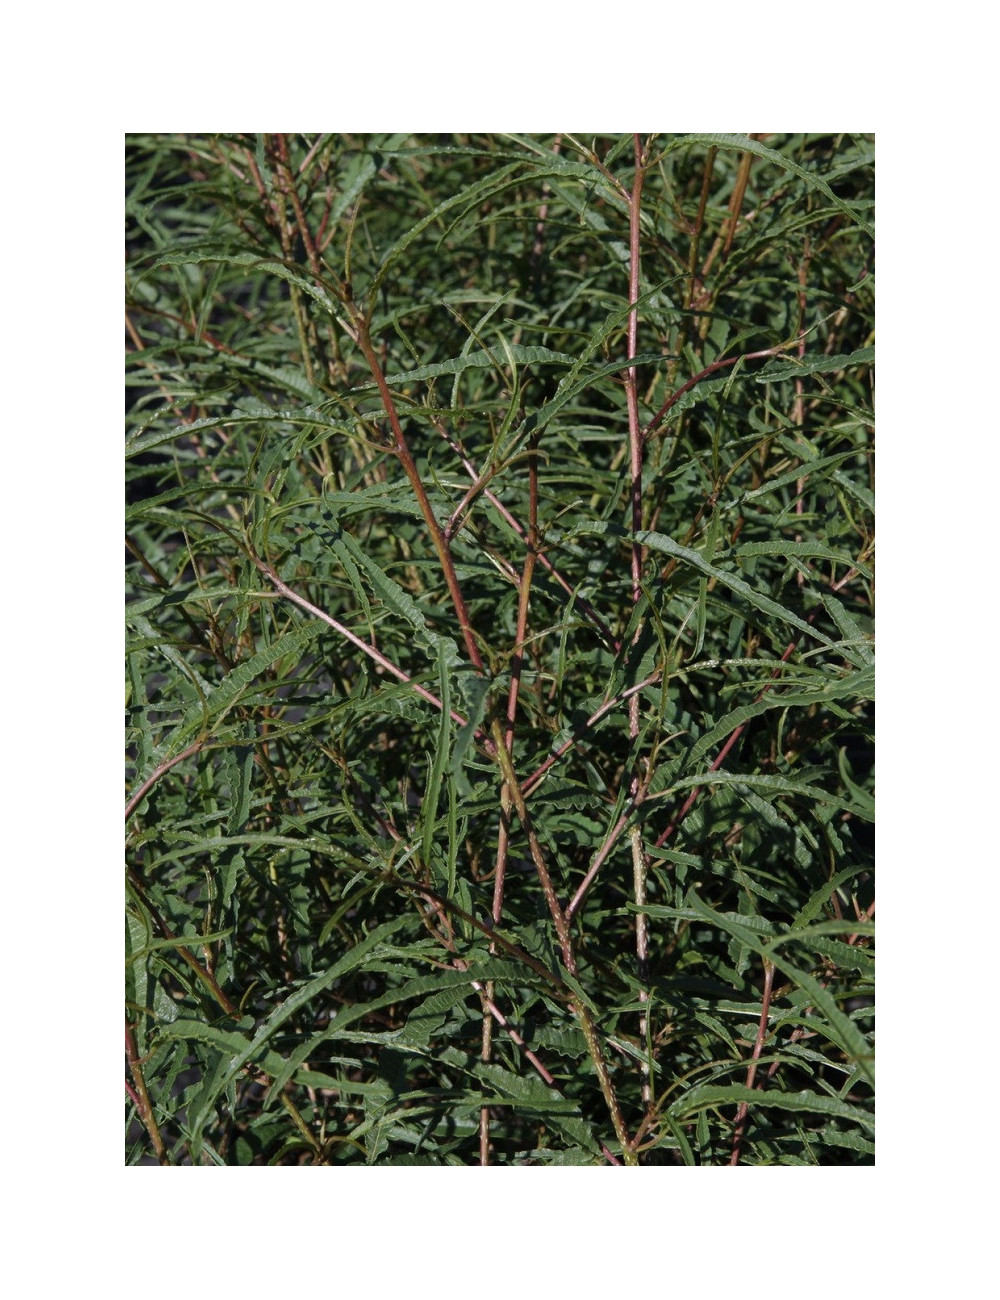 FRANGULA alnus ASPLENIIFOLIA (Bourdaine)